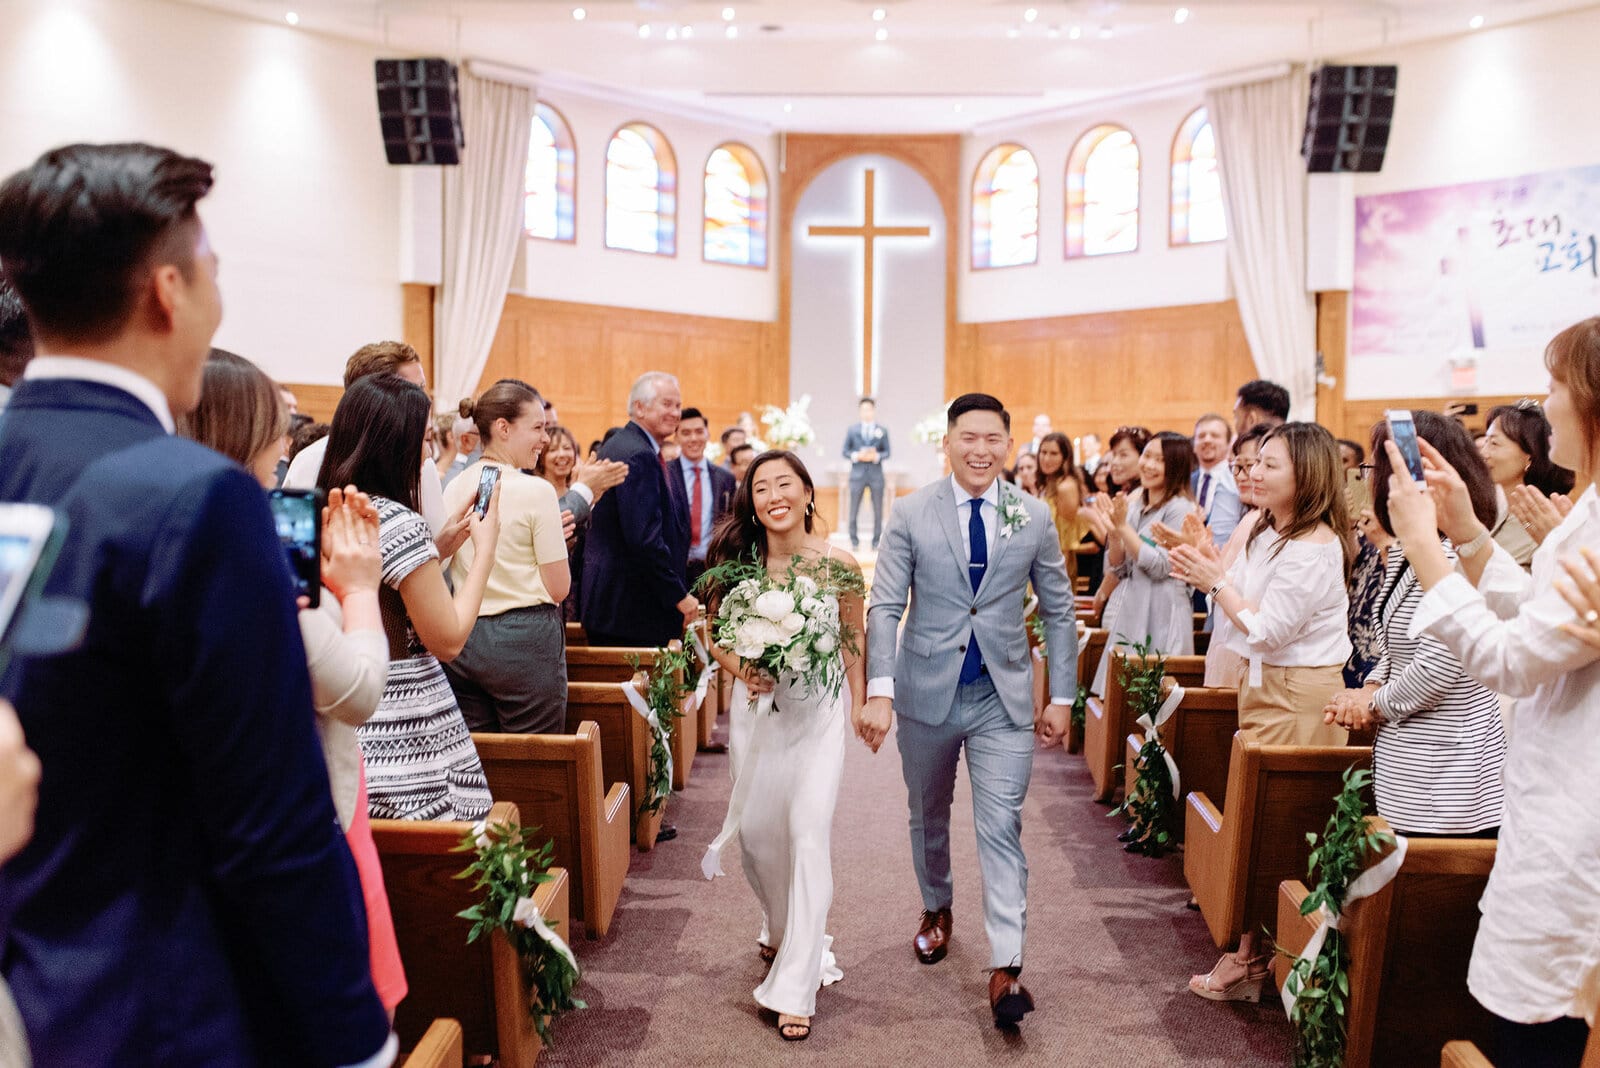 Modern Bride and Groom Happy Joyful Recessional in church korean ceremony Toronto Wedding Photographer Jacqueline James Photography